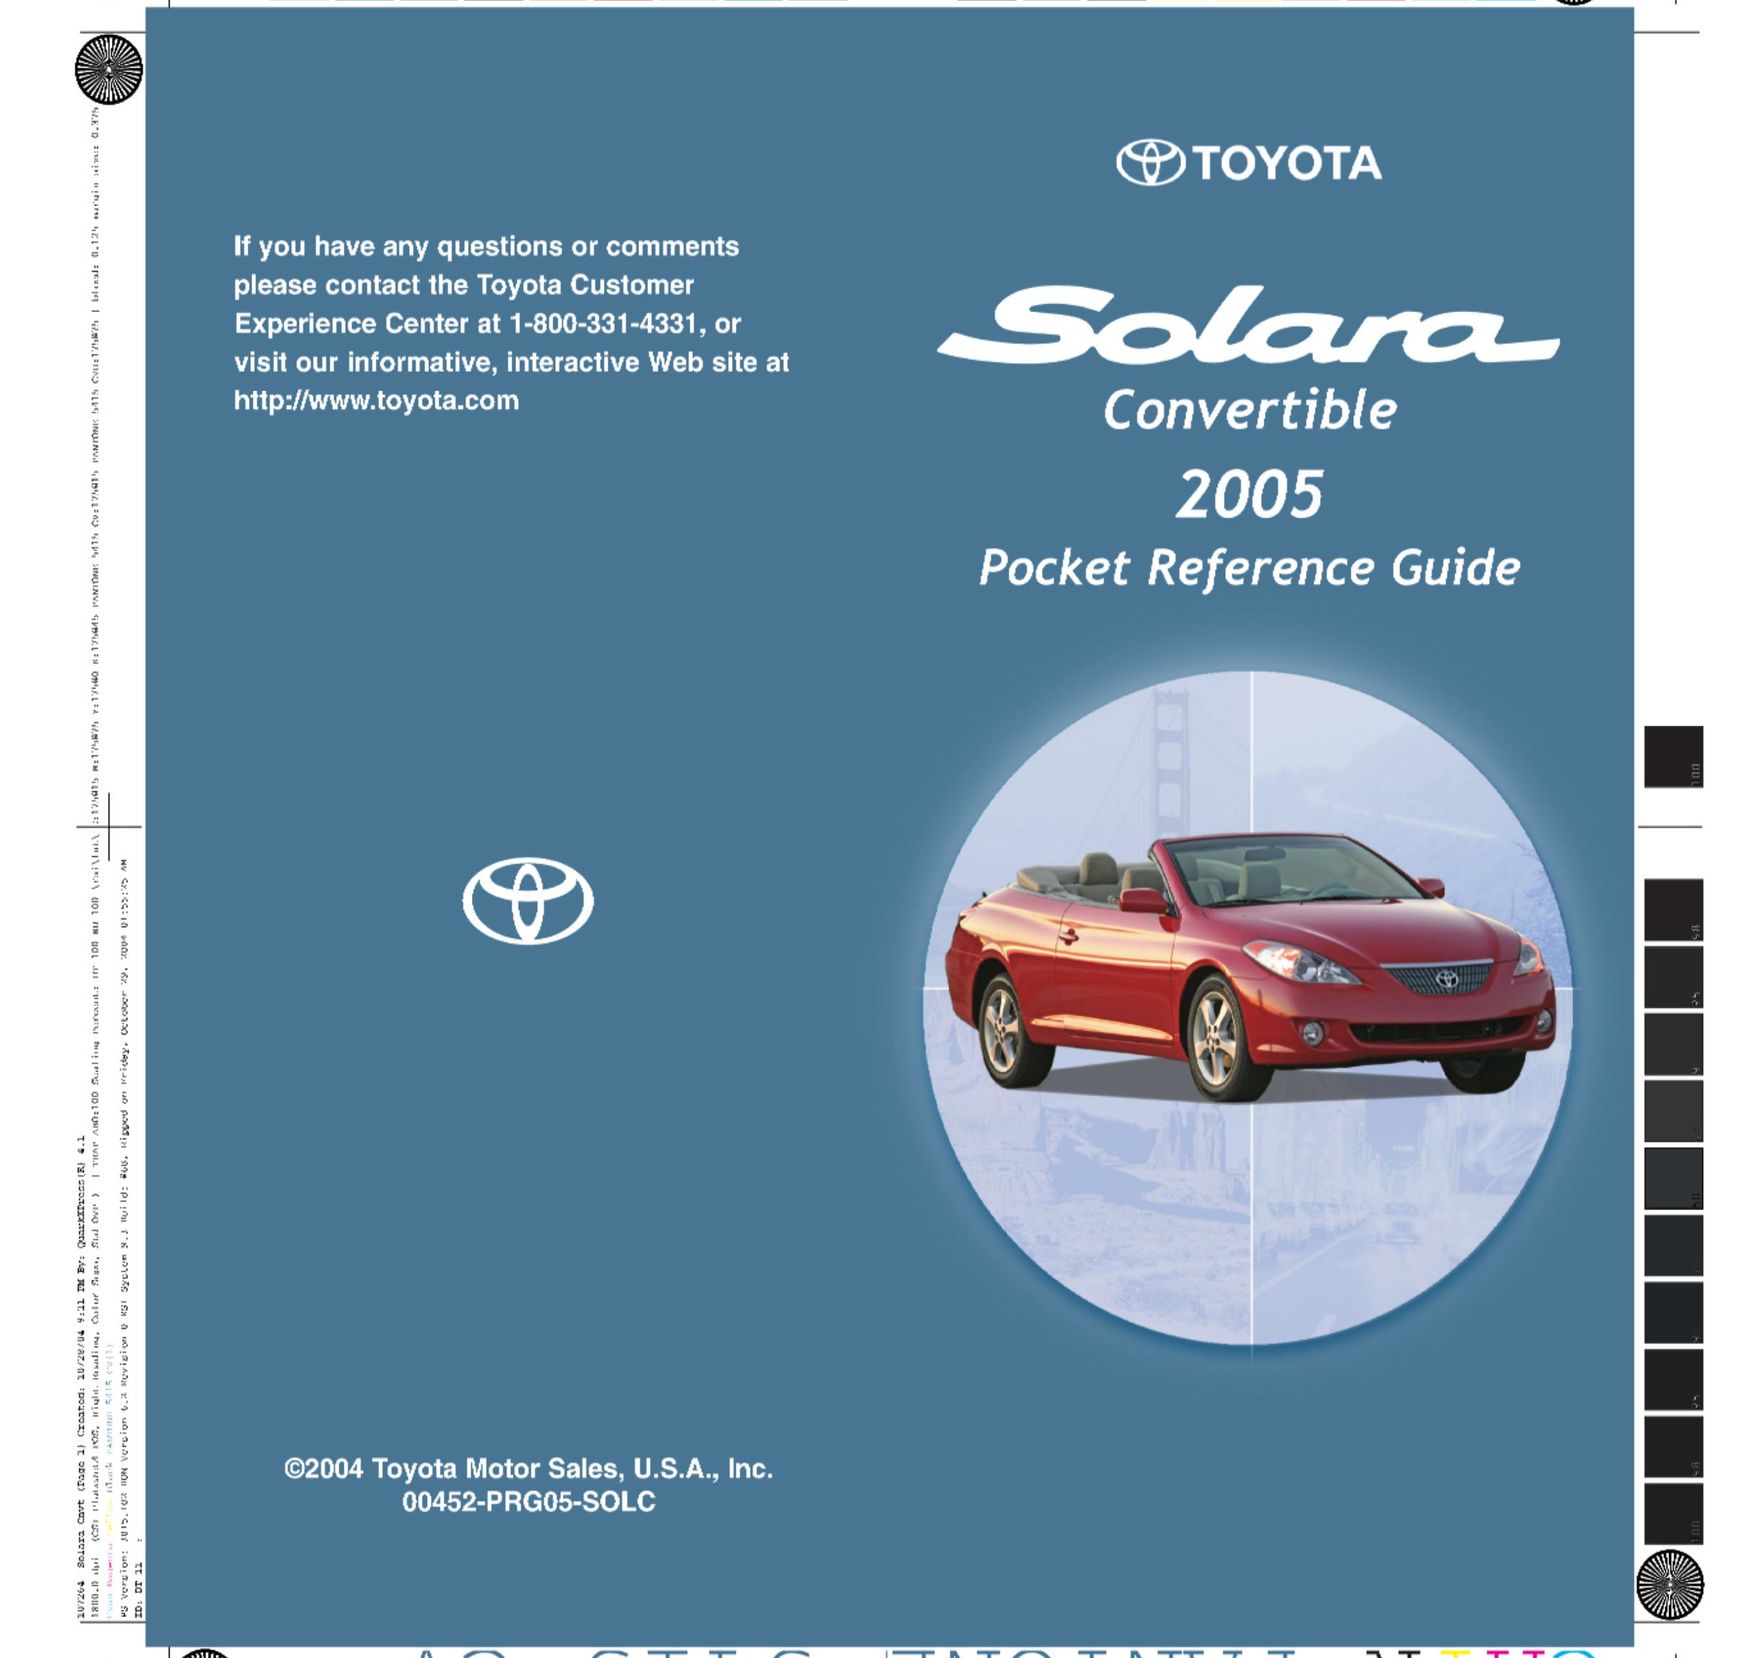 Toyota 2005 Network Card User Manual